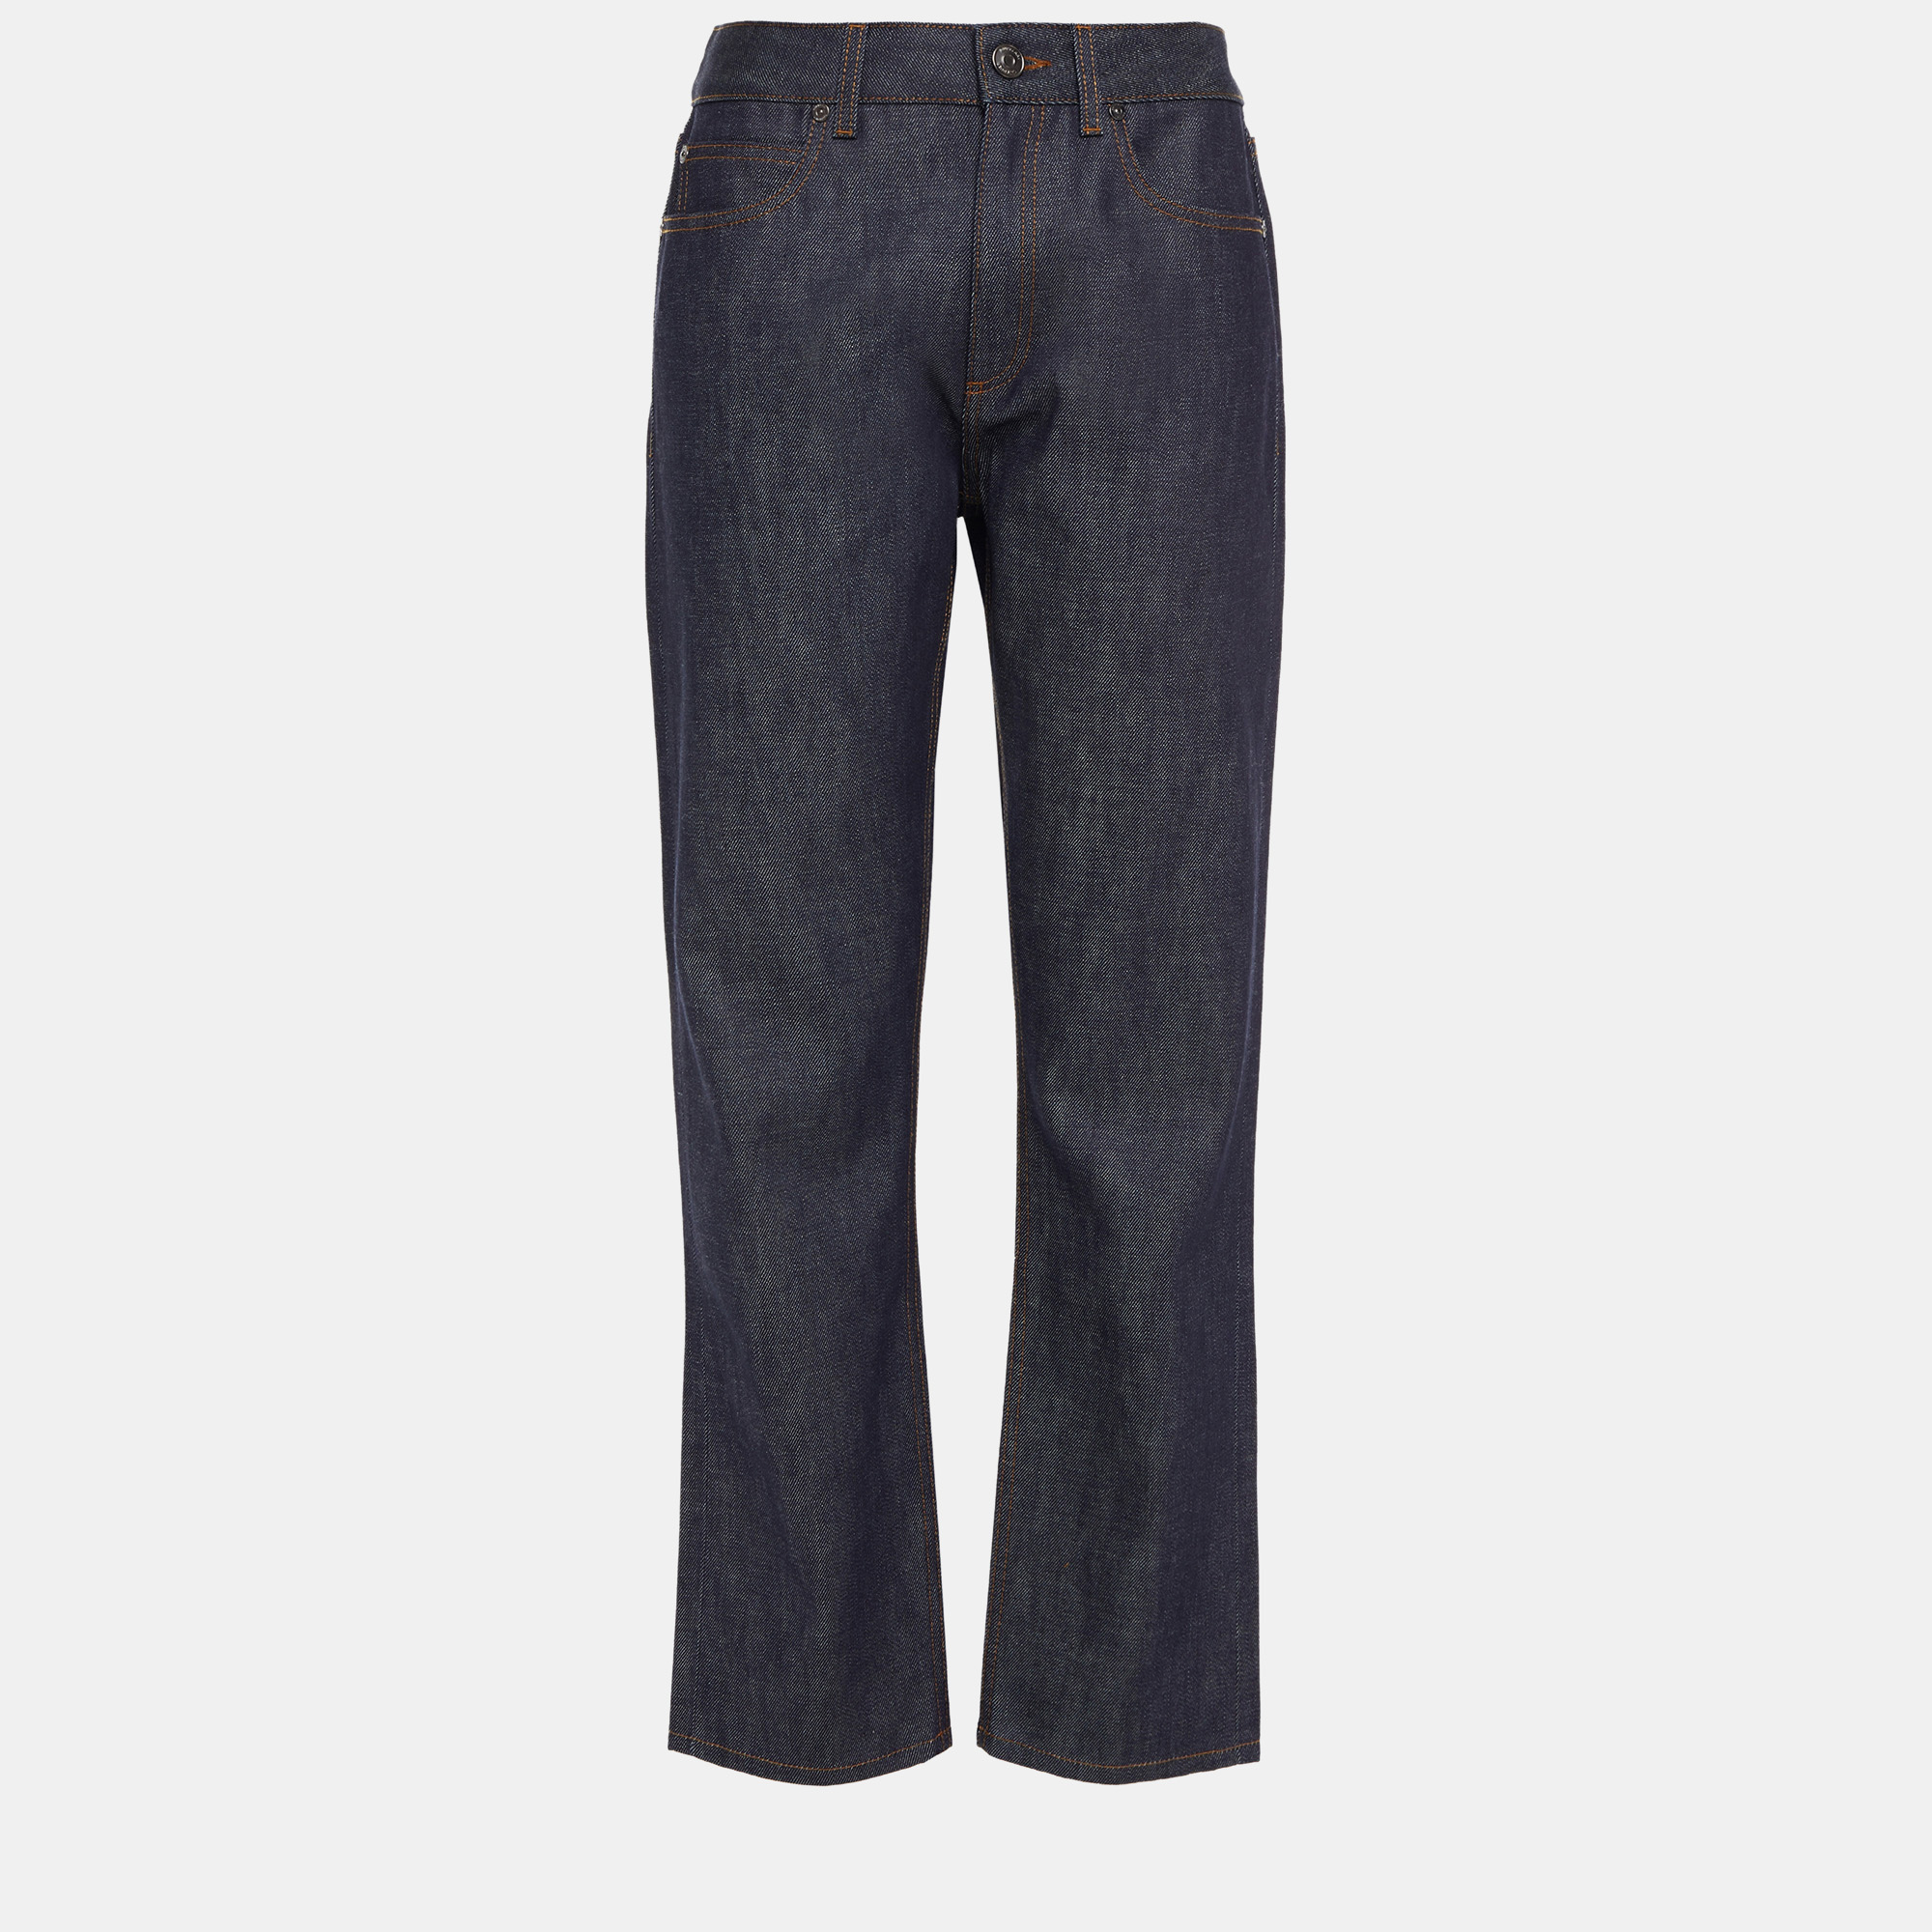 Burberry cotton straight leg jeans 32